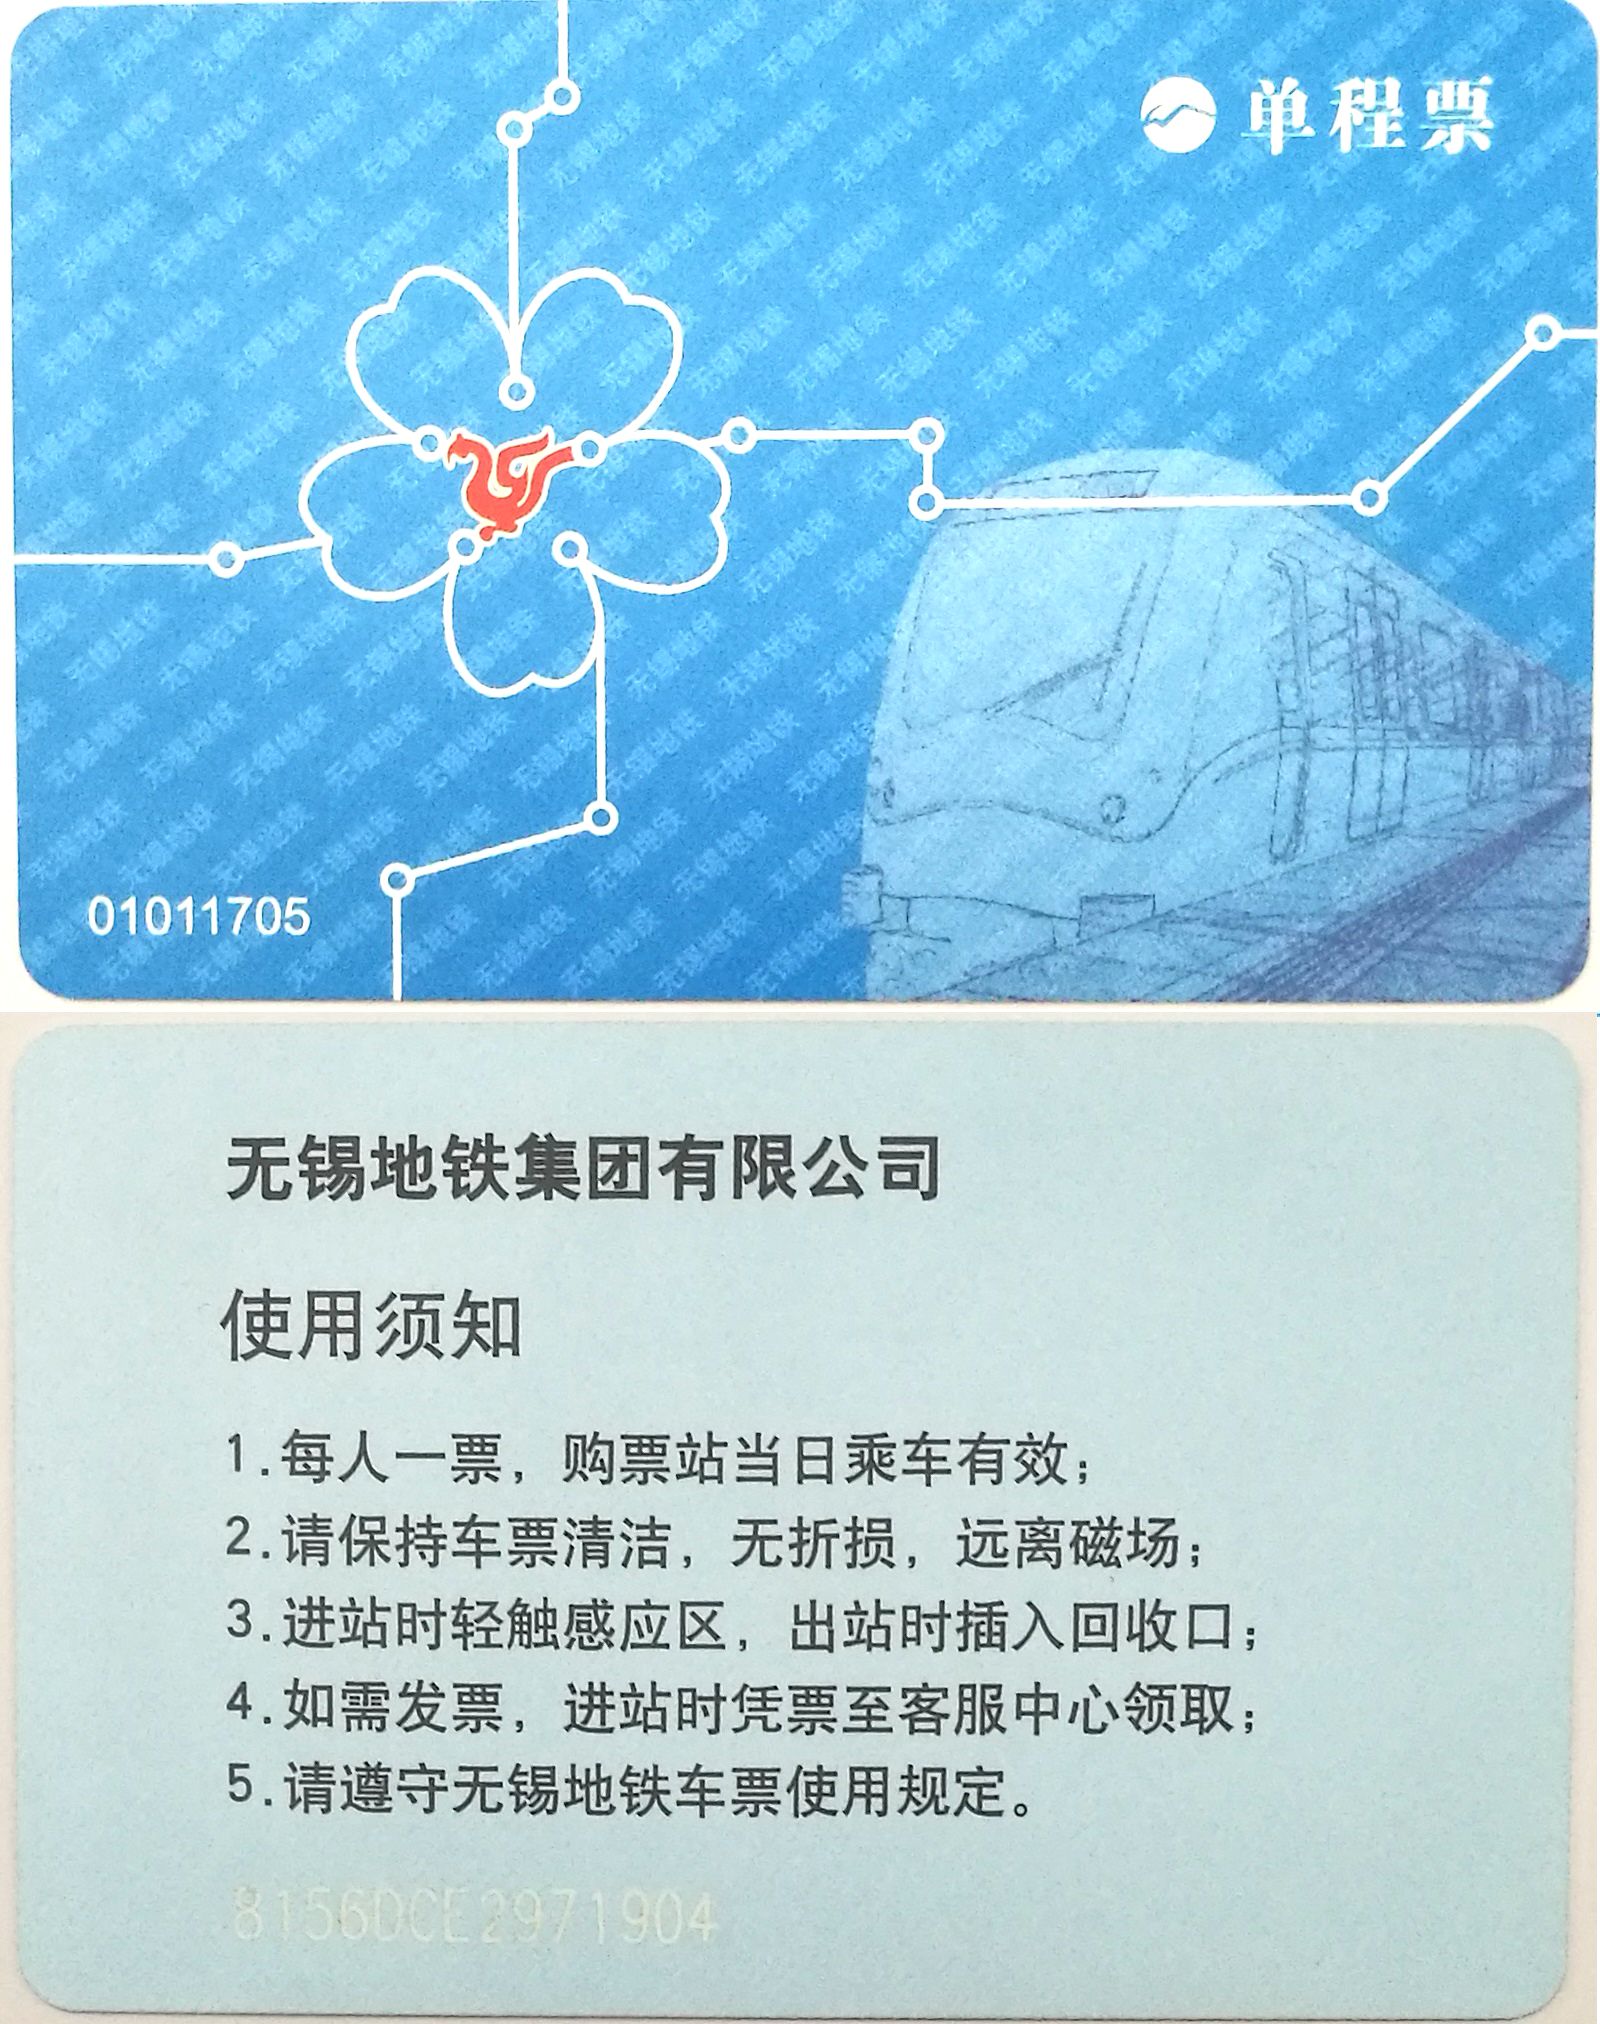 T5275, China Wuxi City, Metro Card (Subway Ticket), One Way 2017, Invalid - Click Image to Close